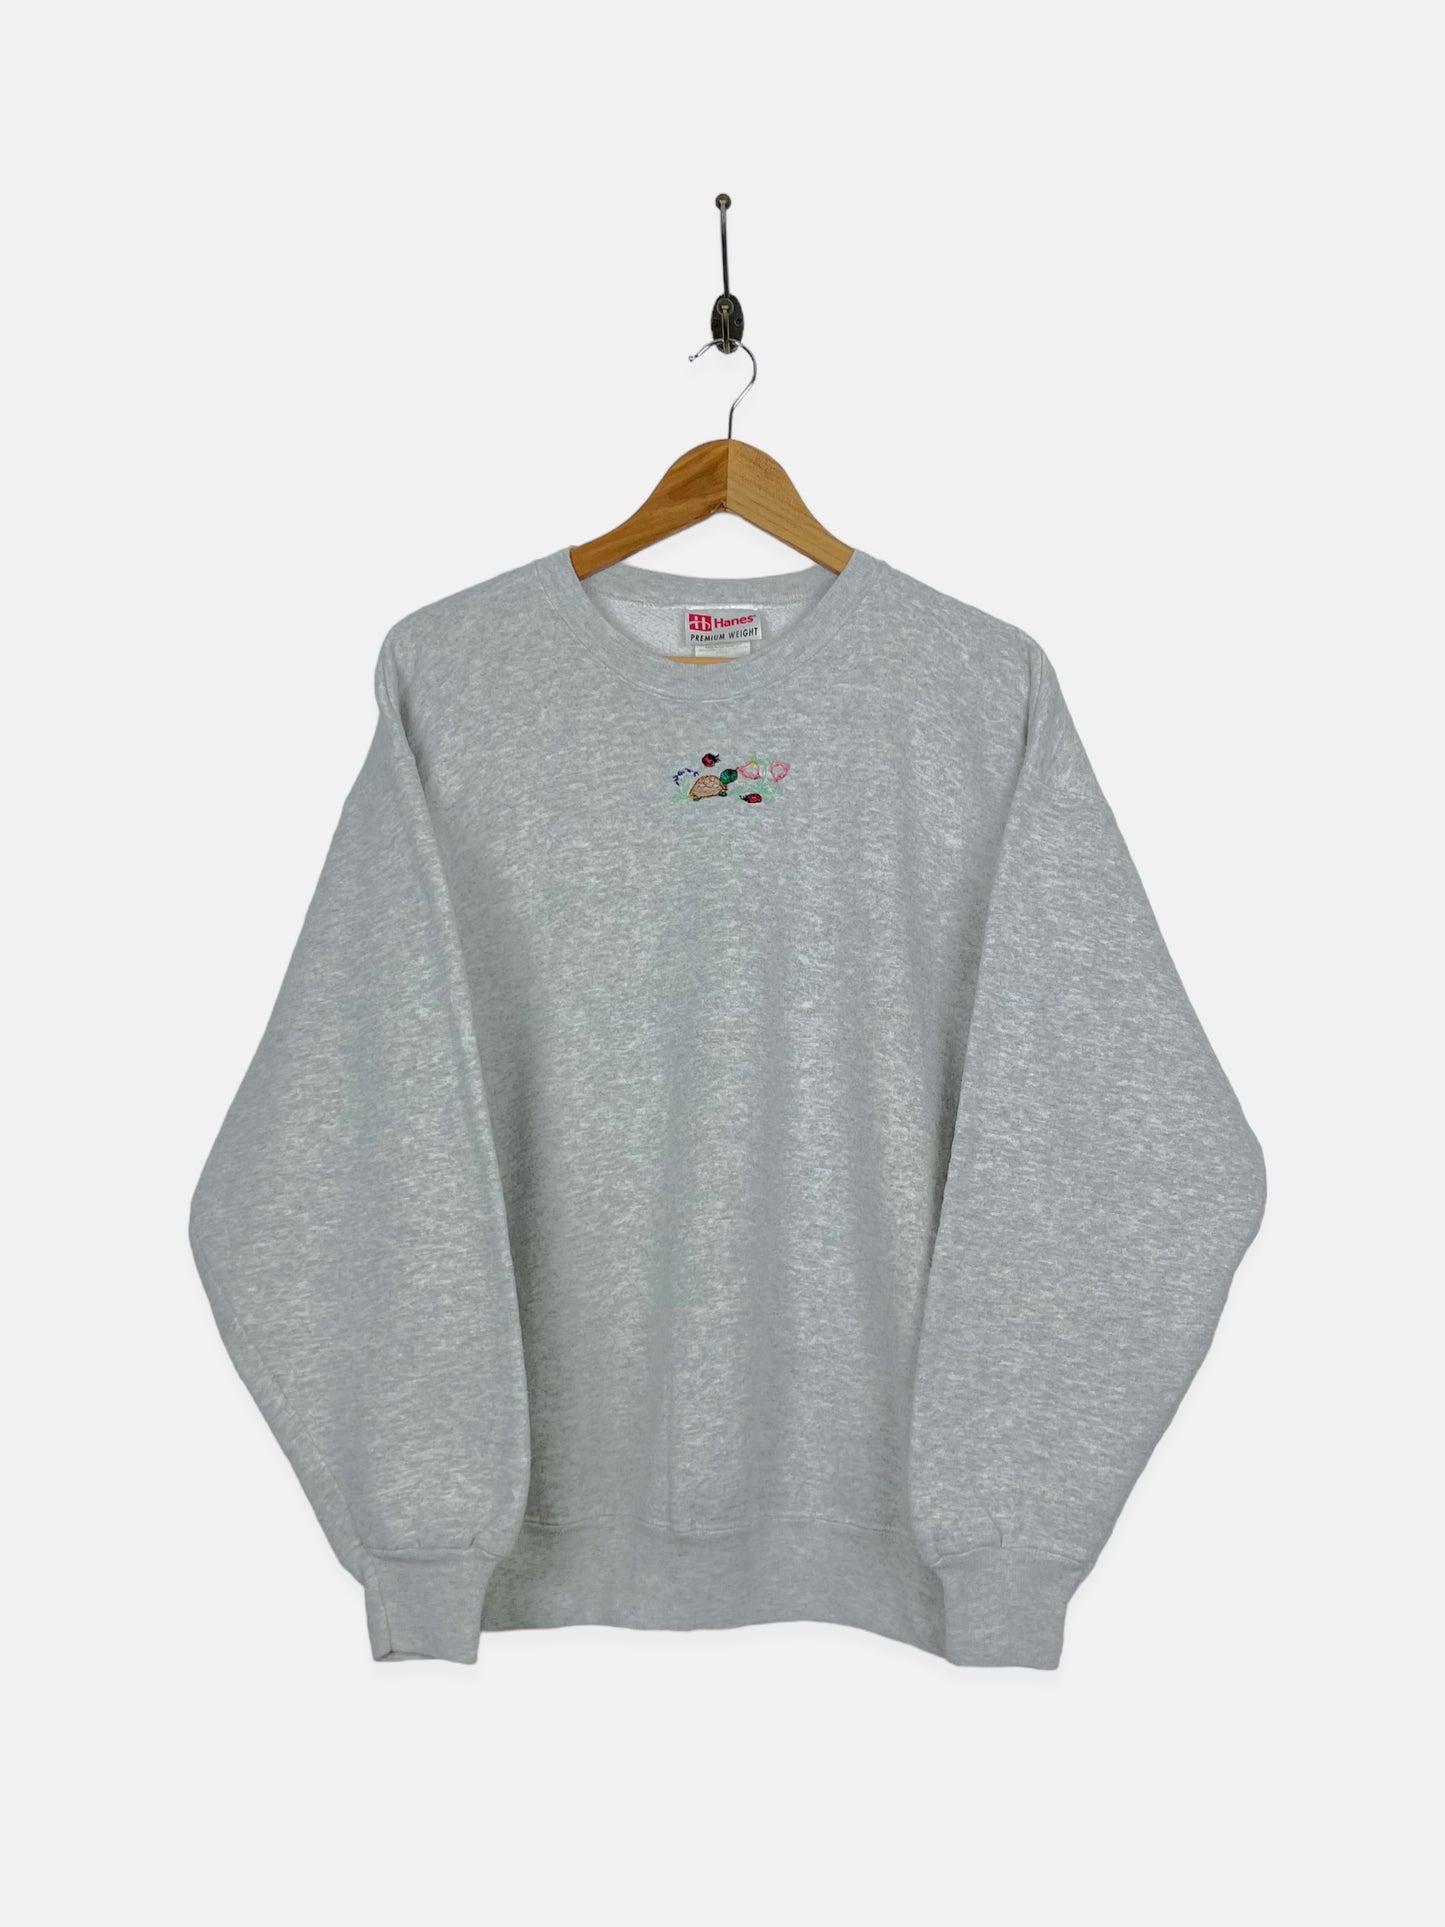 90's Turtle Embroidered Vintage Sweatshirt Size M